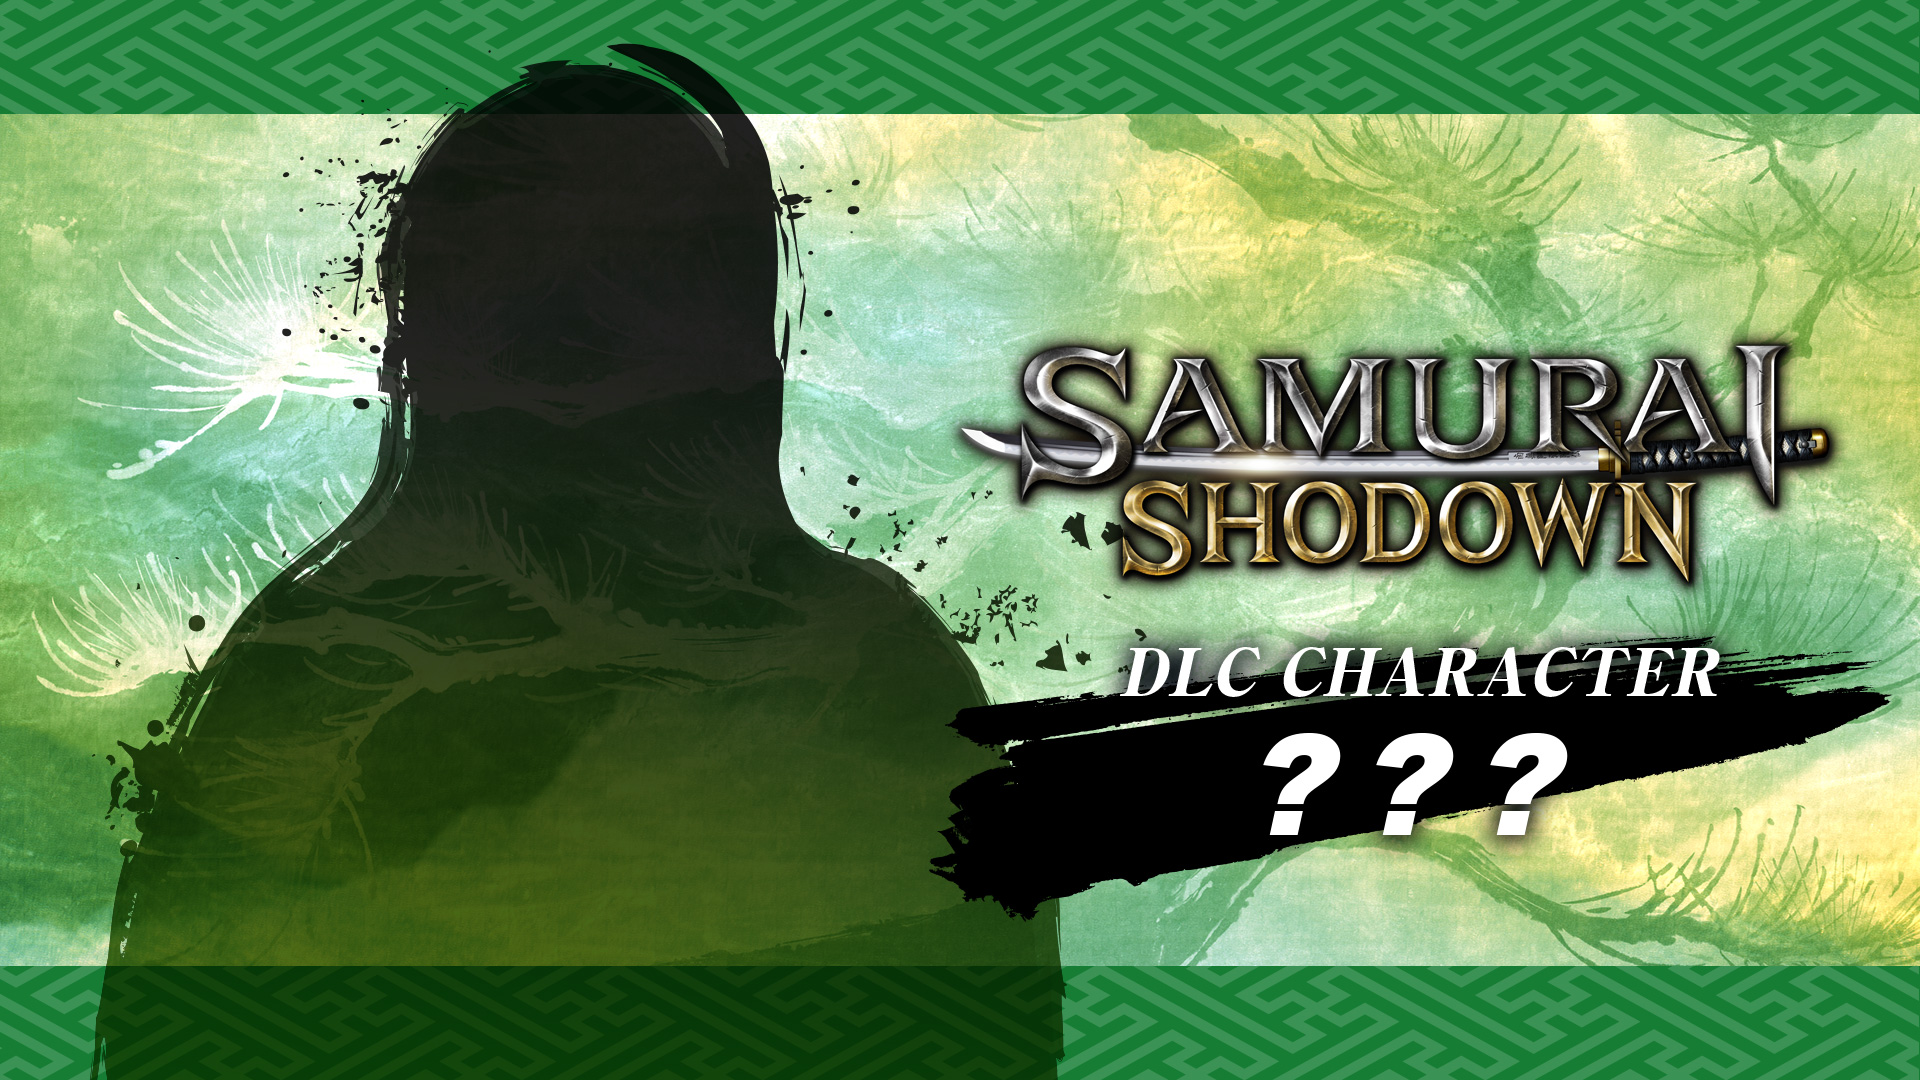 SAMURAI SHODOWN: CHARACTER "???"